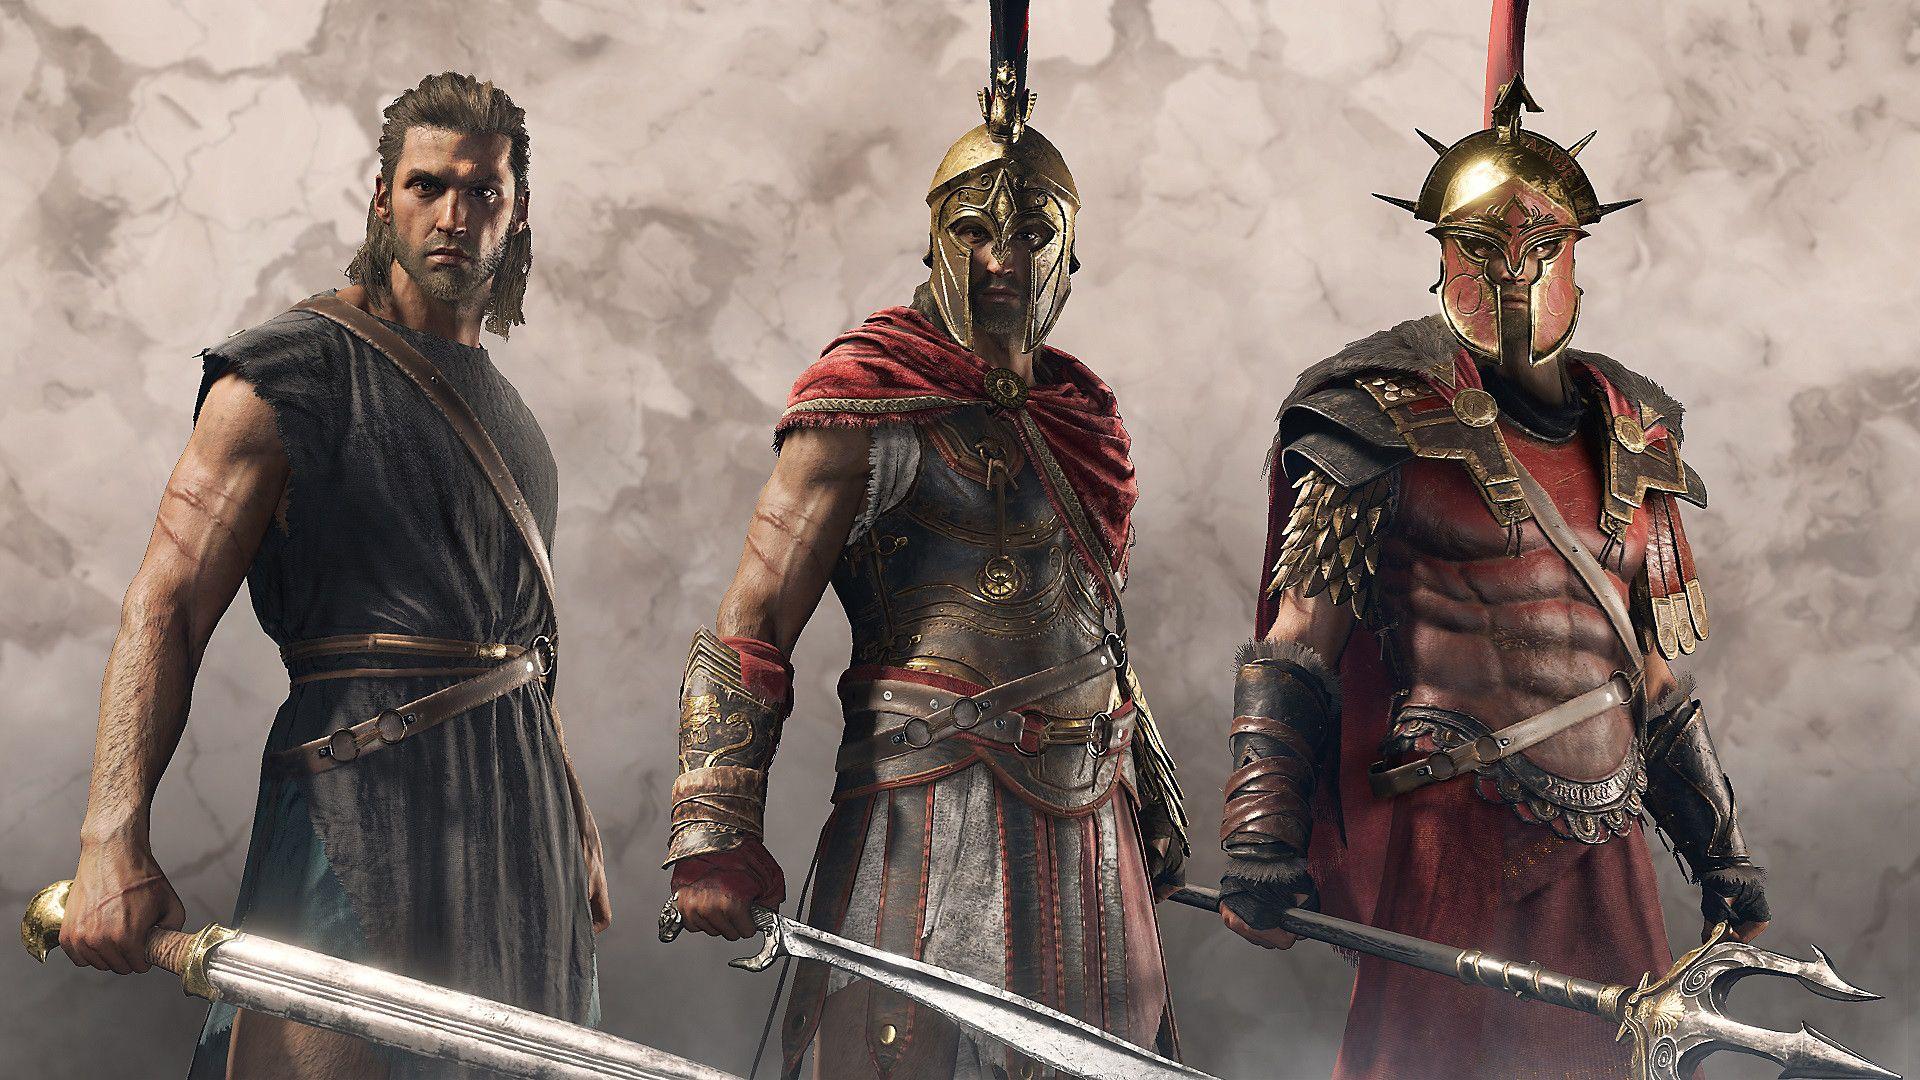 Đĩa PS4 Assassin's Creed Odyssey